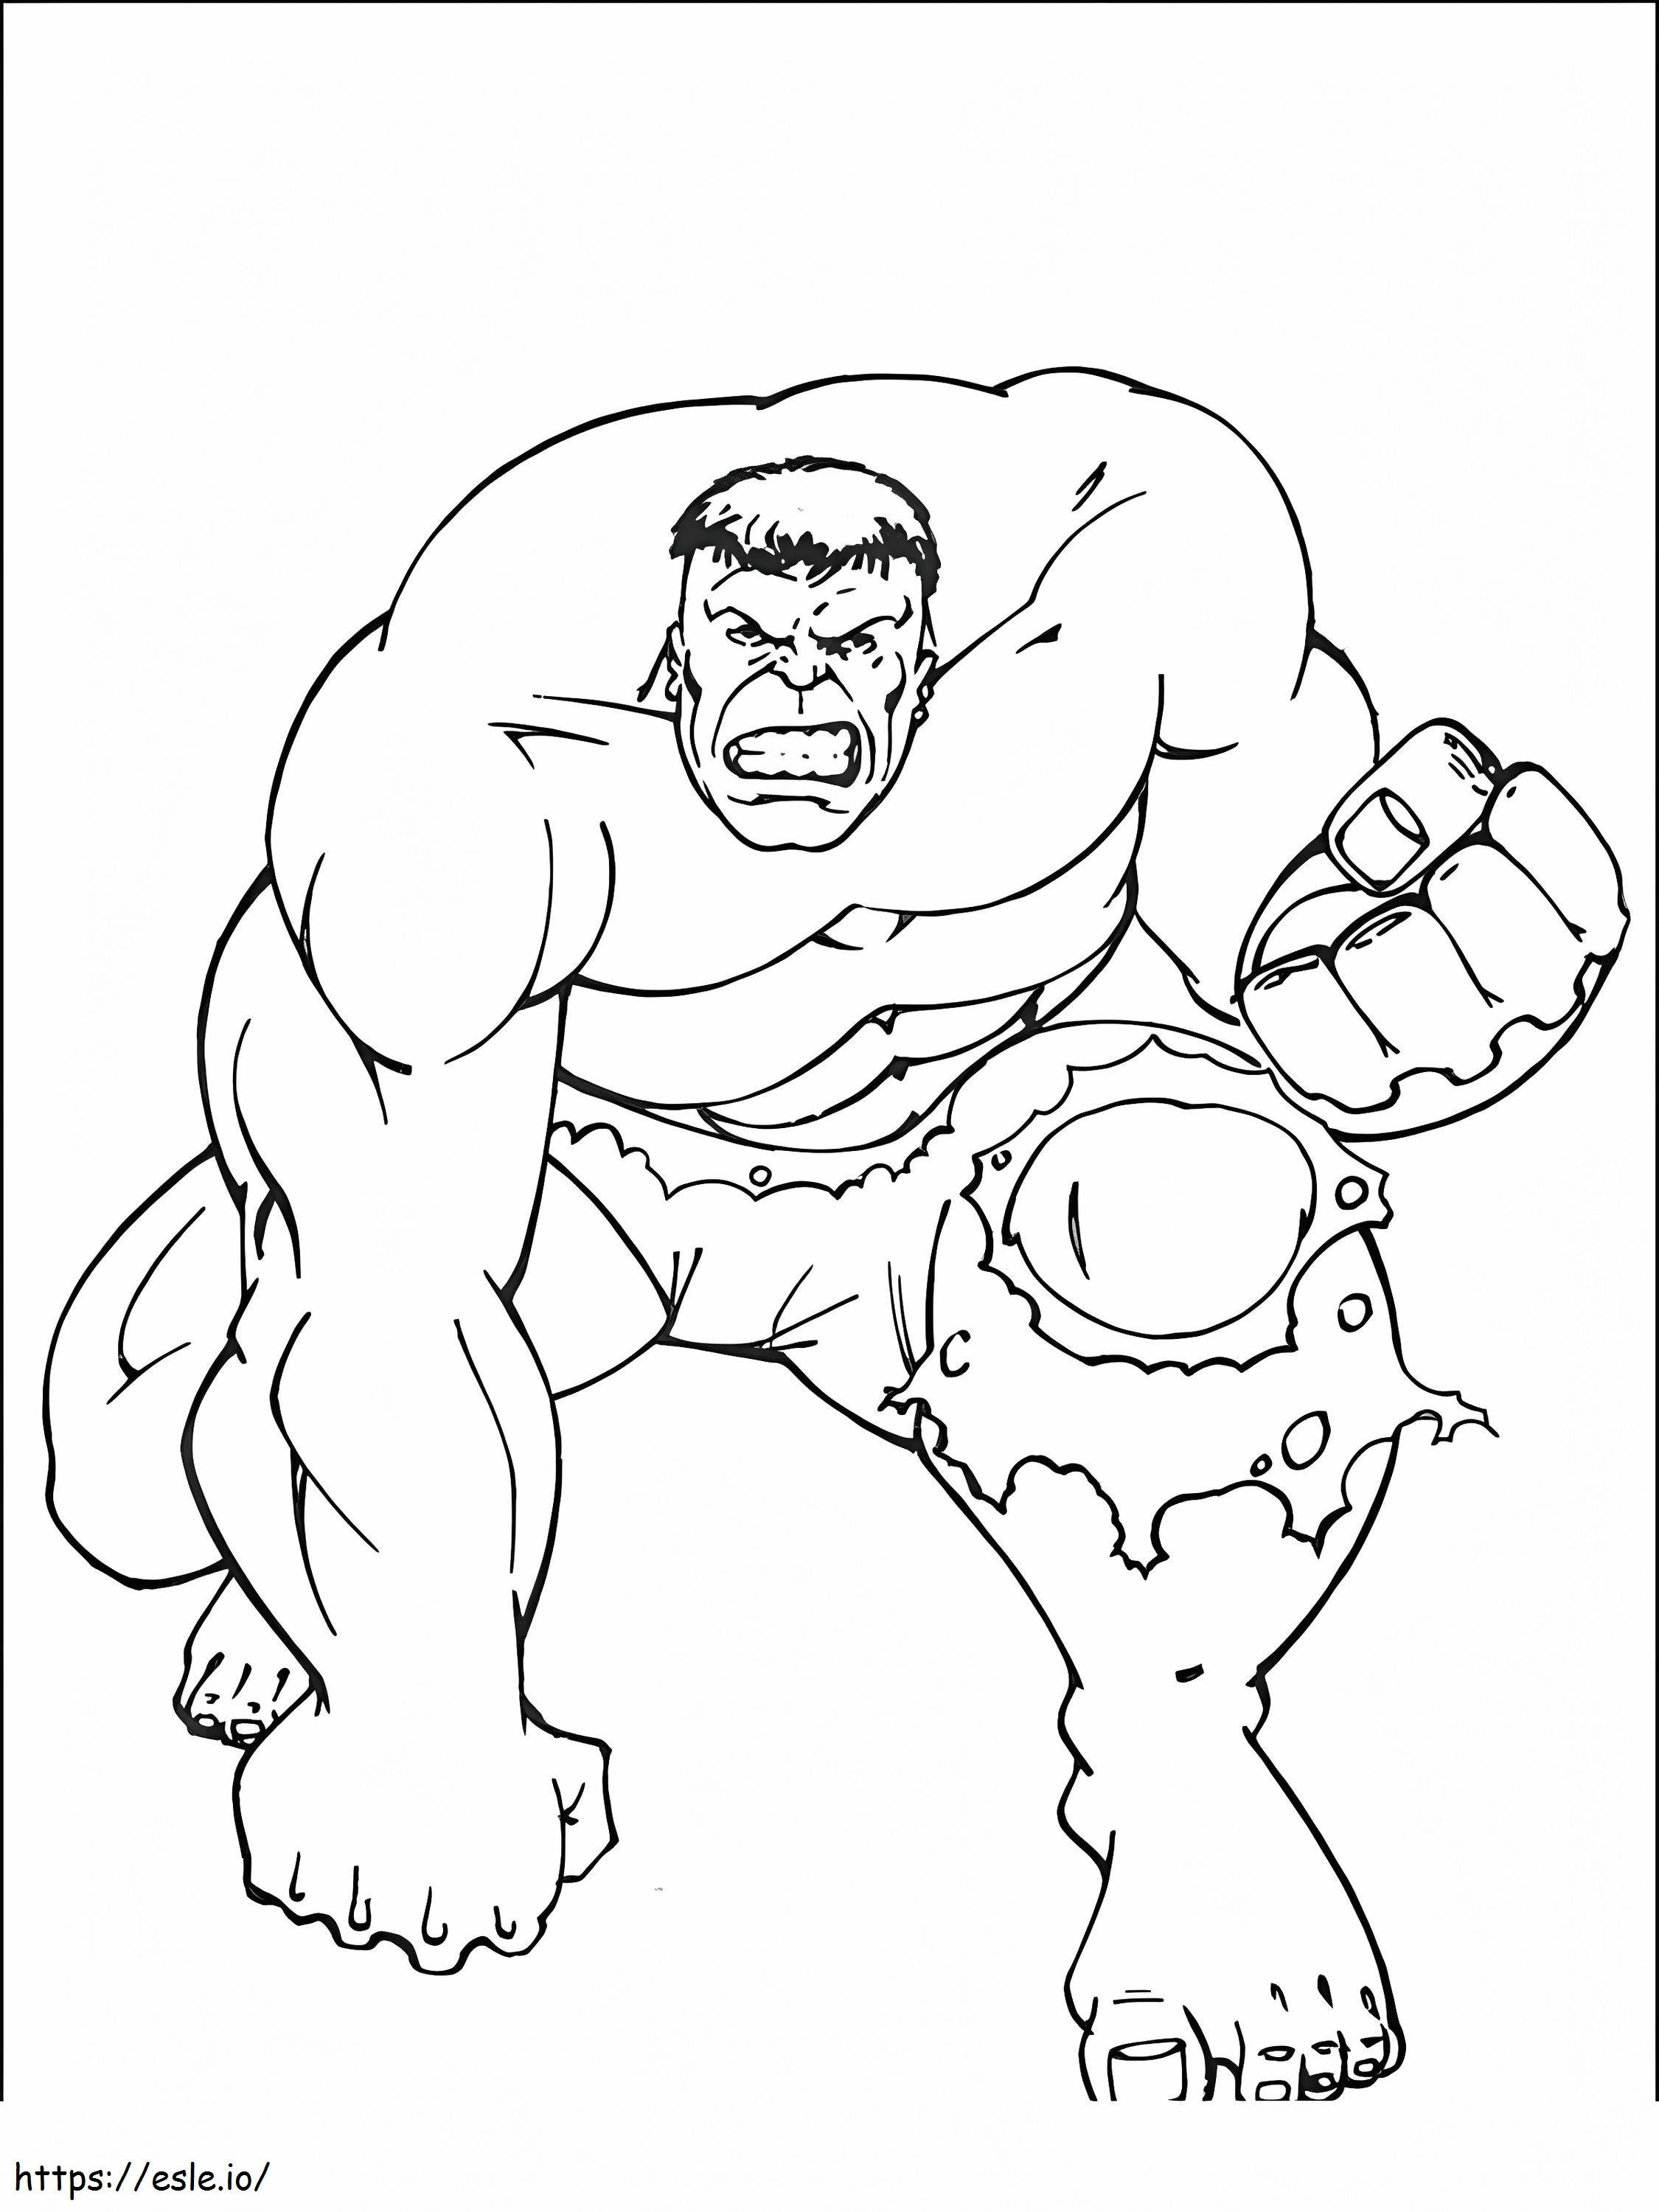 Hulk-Kampf ausmalbilder